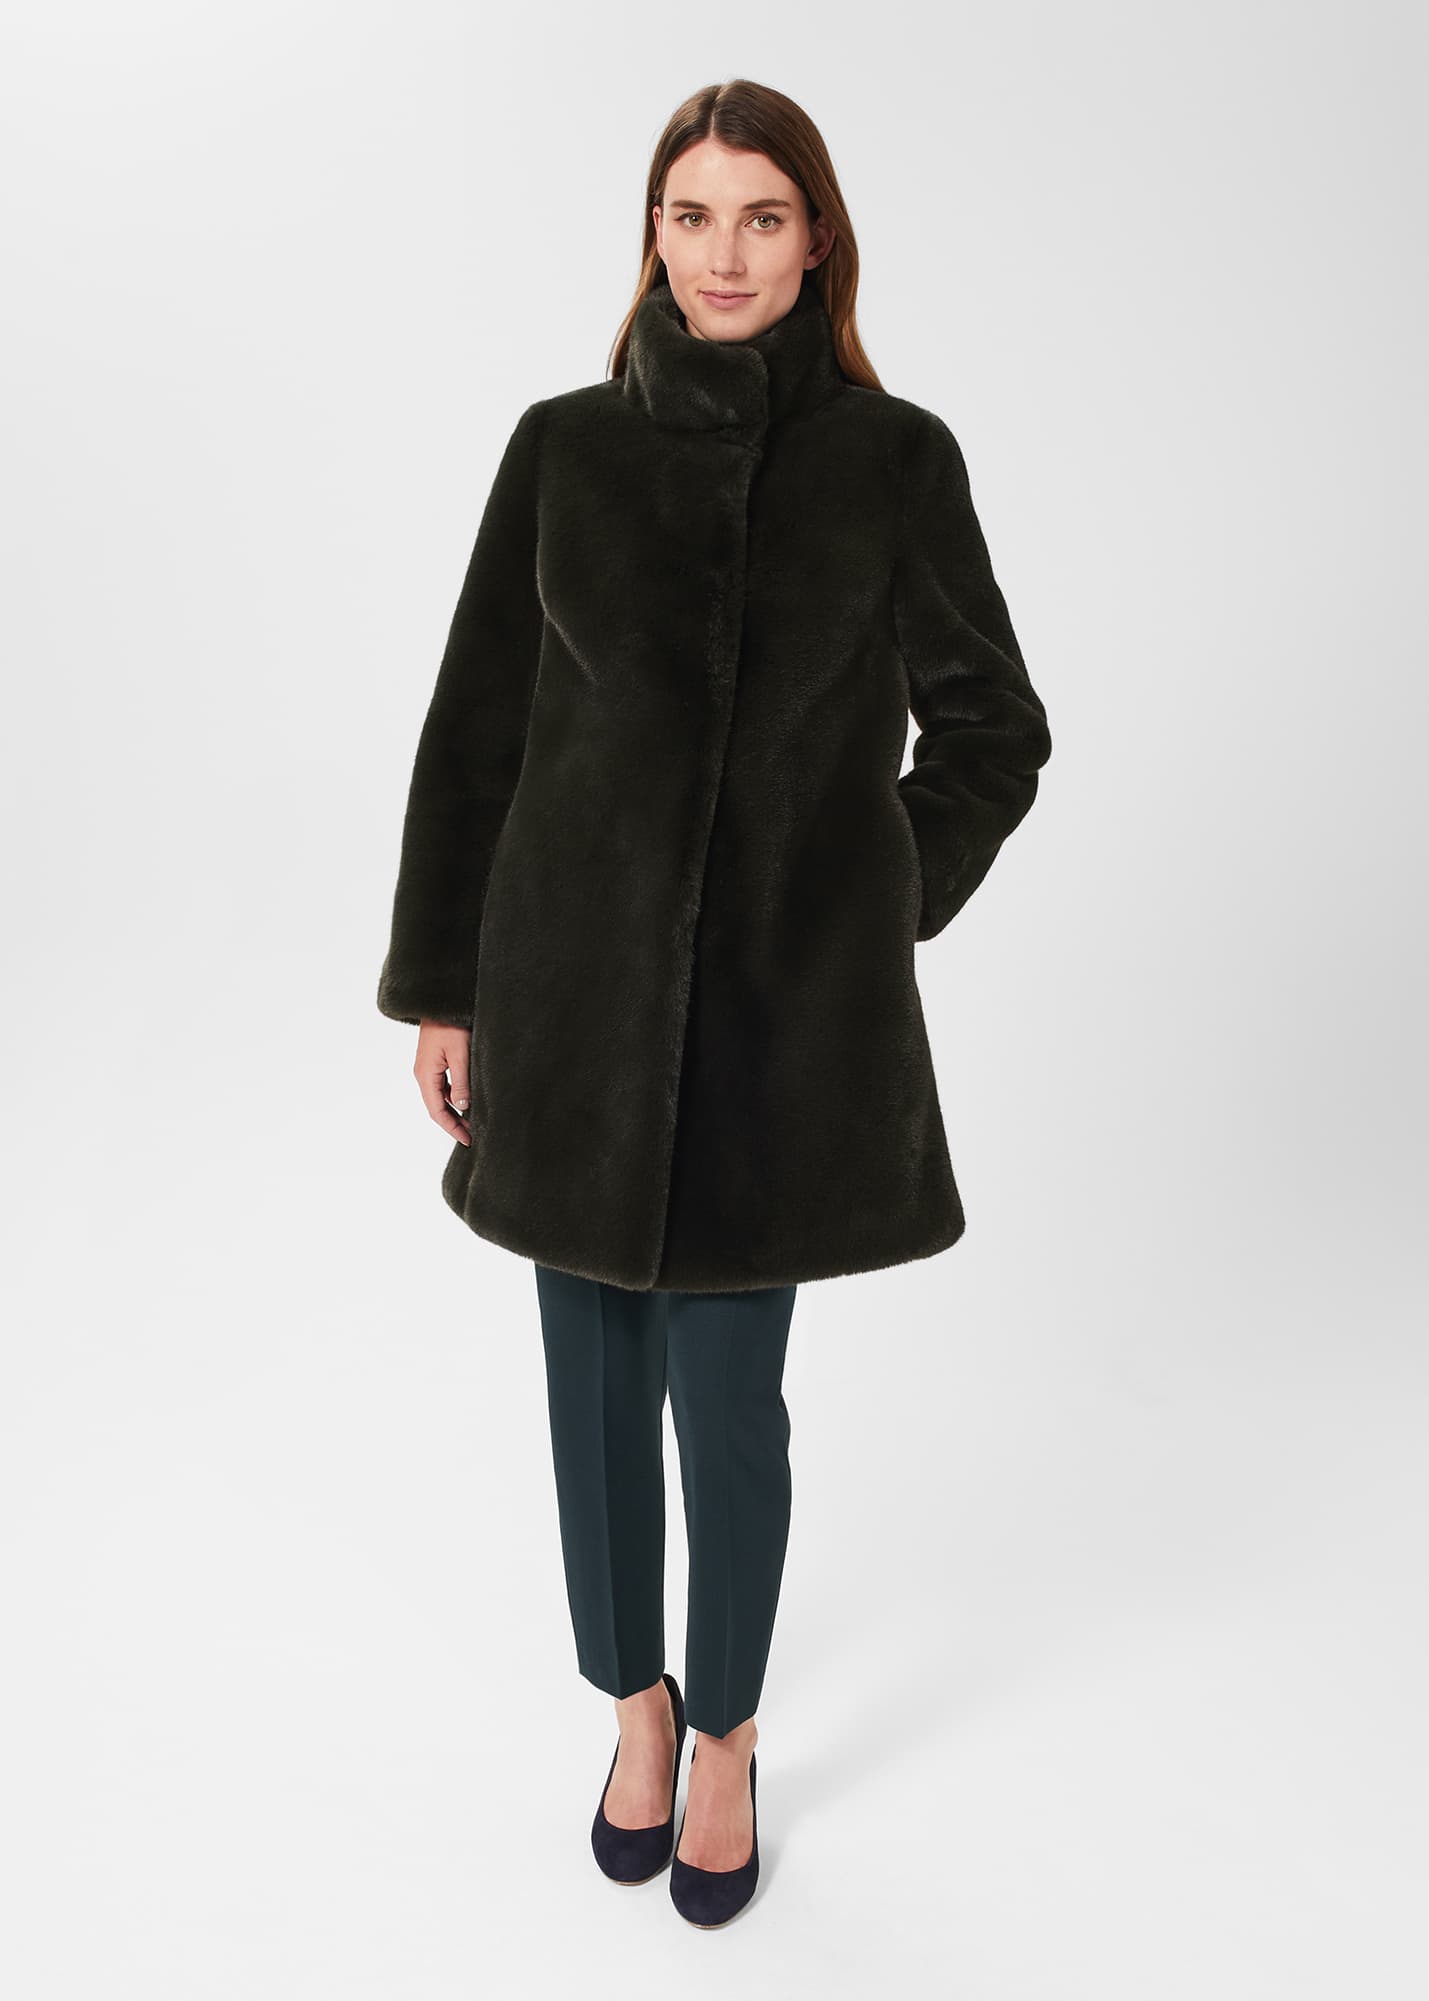 Hobbs Women's Maddox Faux Fur Coat - Olive Green